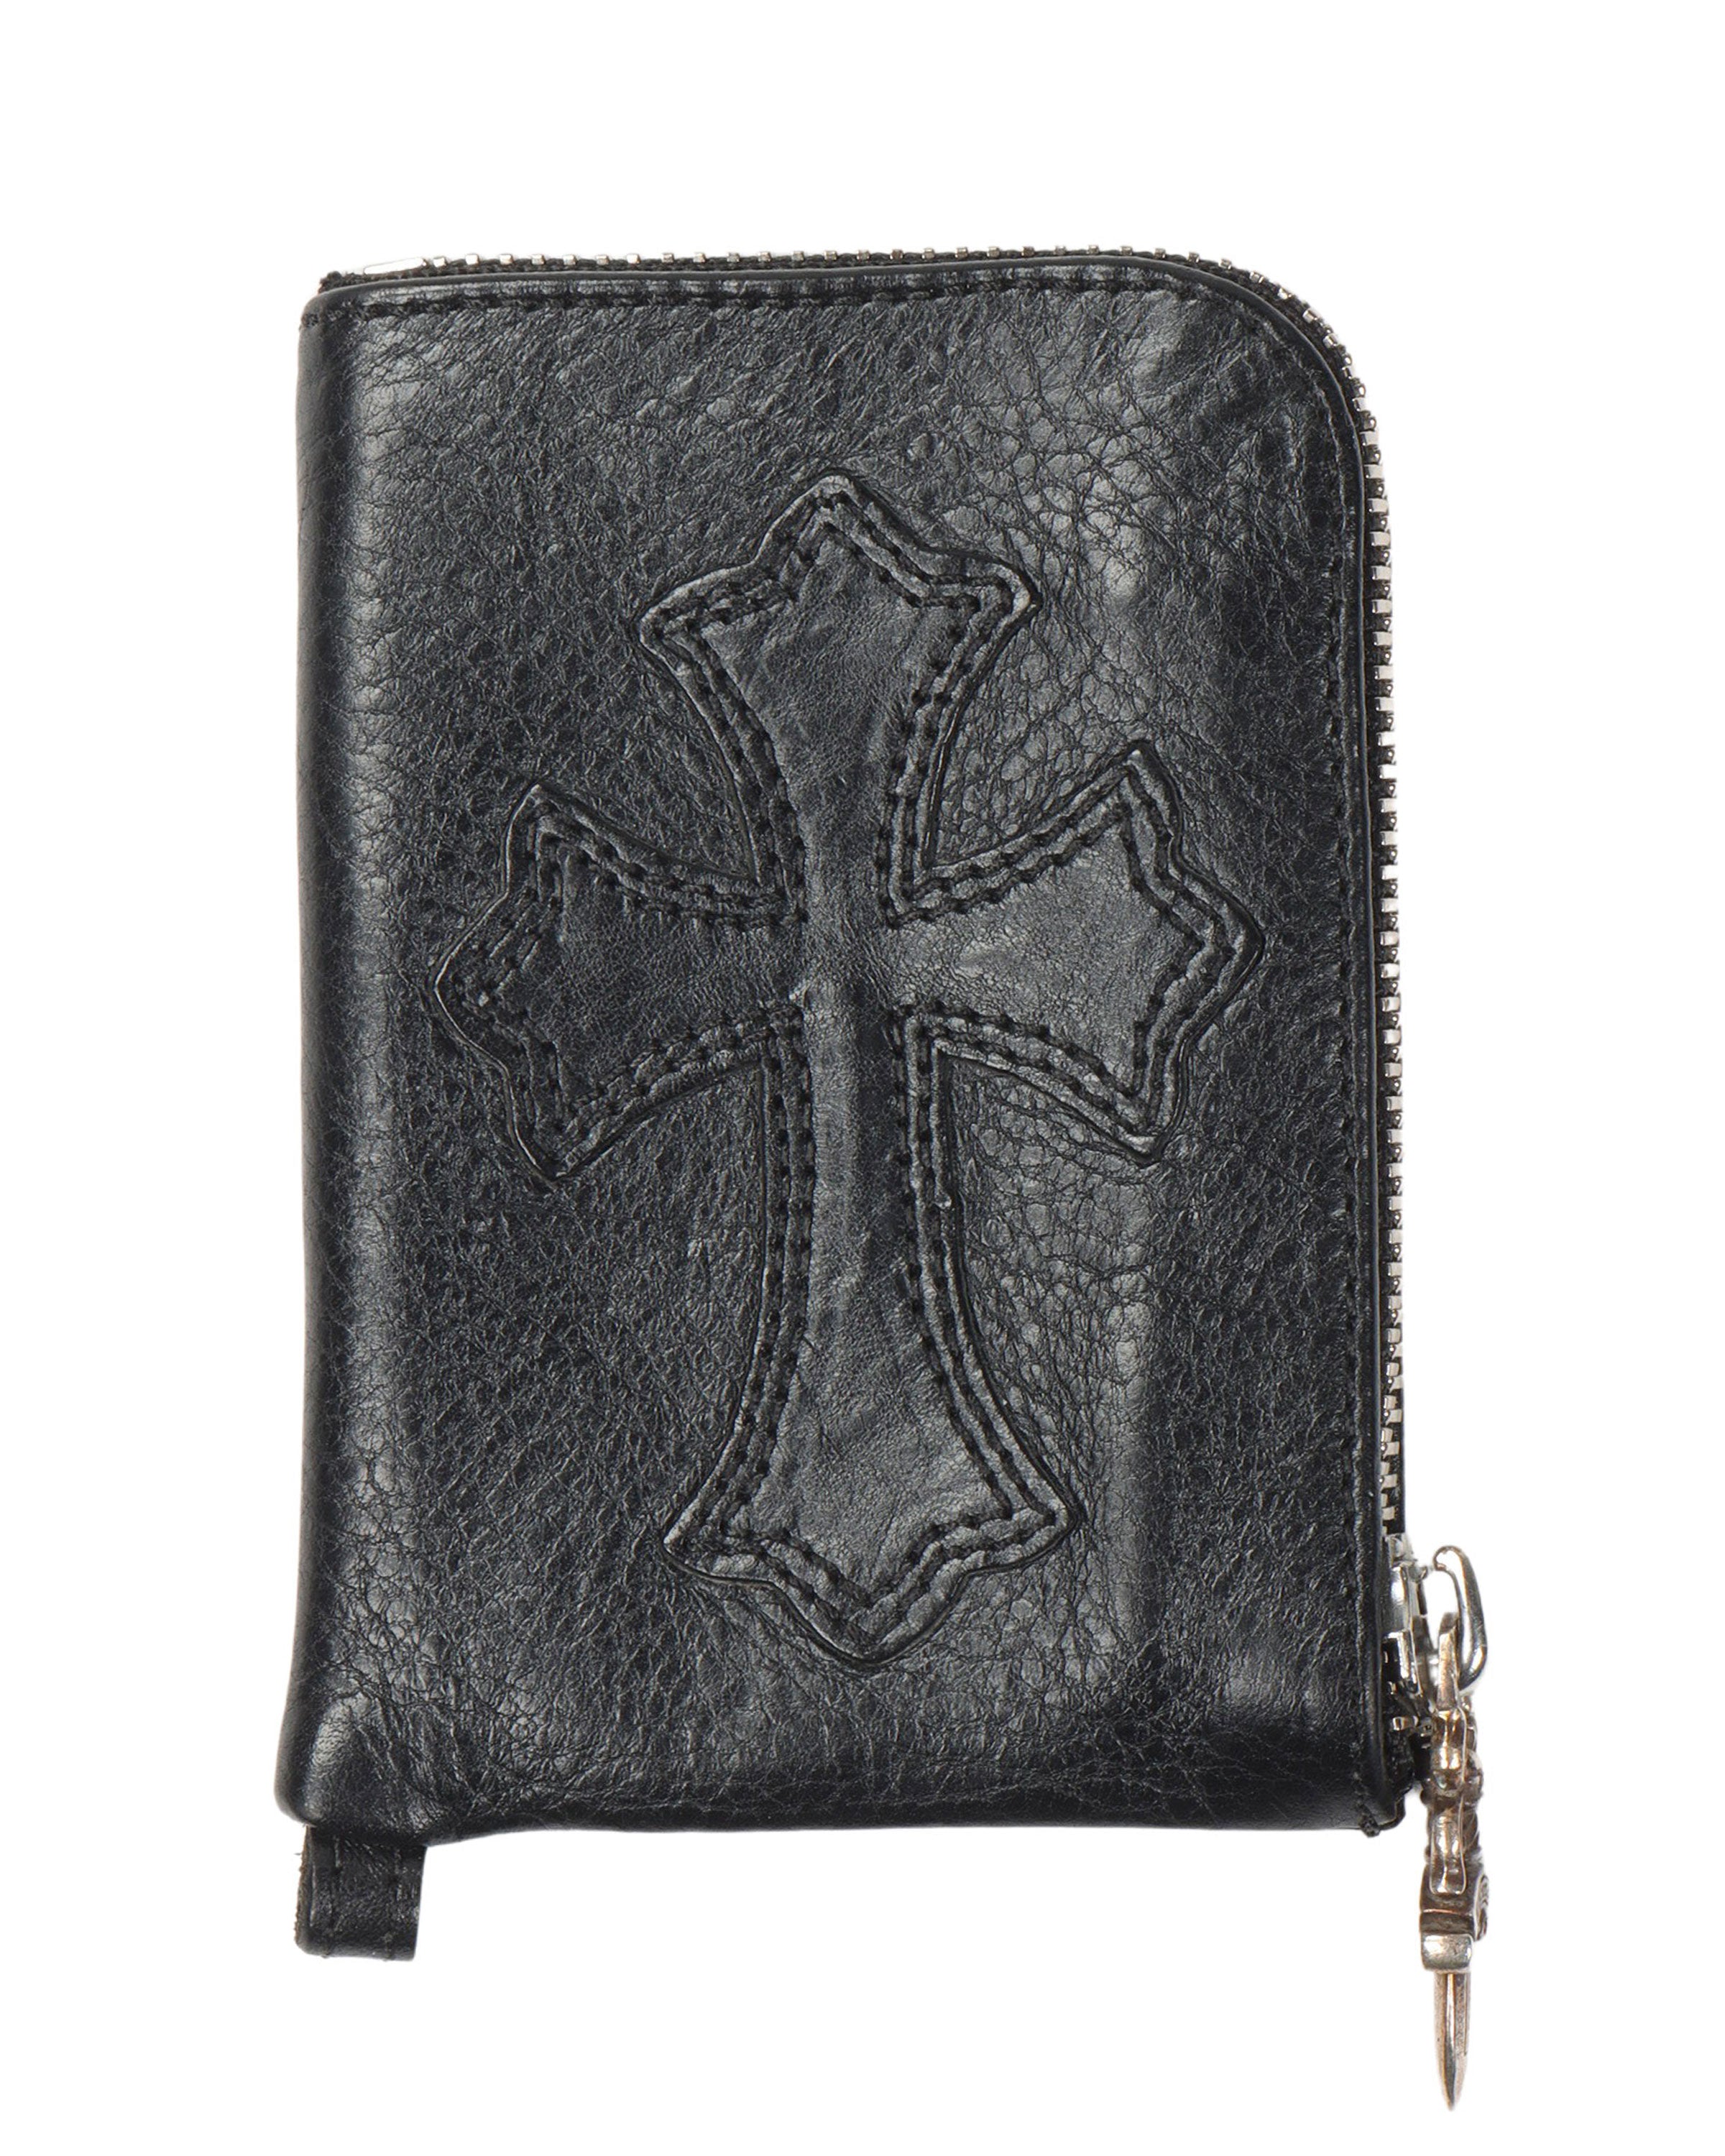 Leather Cross Patch Zip Wallet